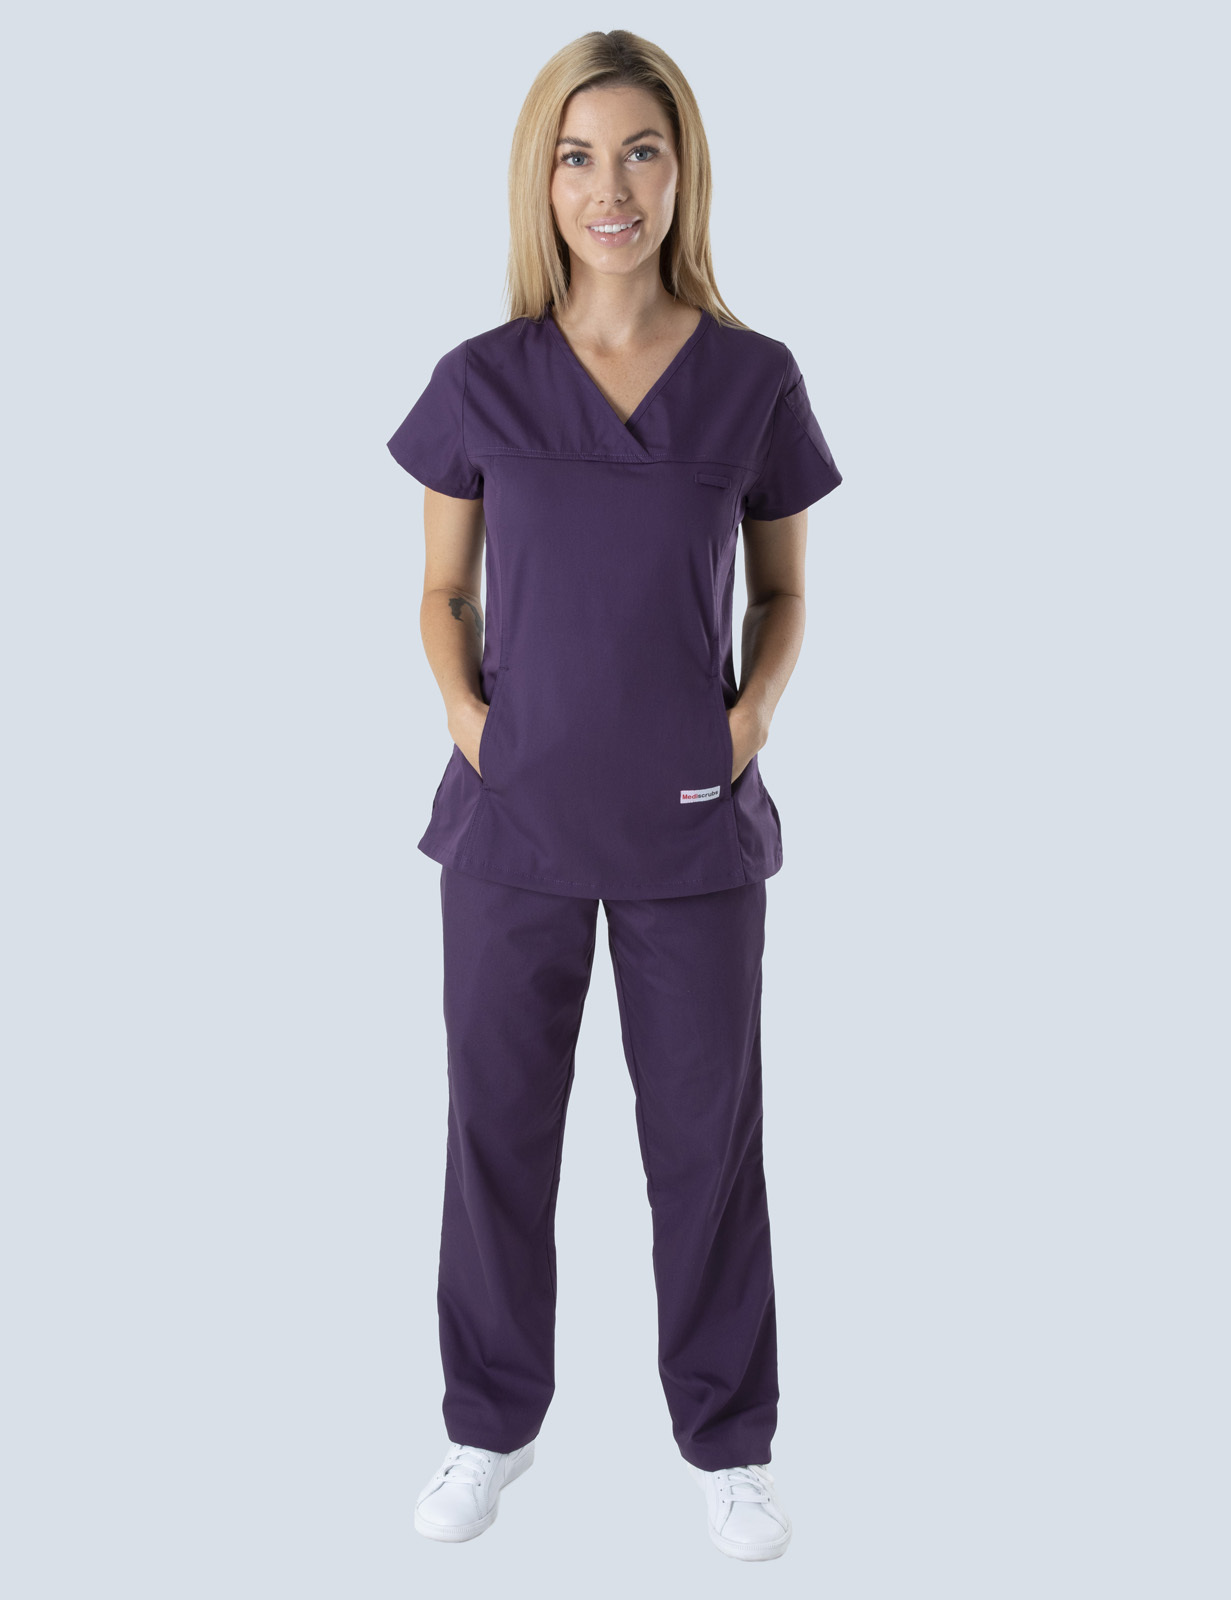 Moranbah Hospital Nursing Uniform Set Bundle ( Women's Fit Solid Top and Cargo Pants in Aubergine incl Logo)